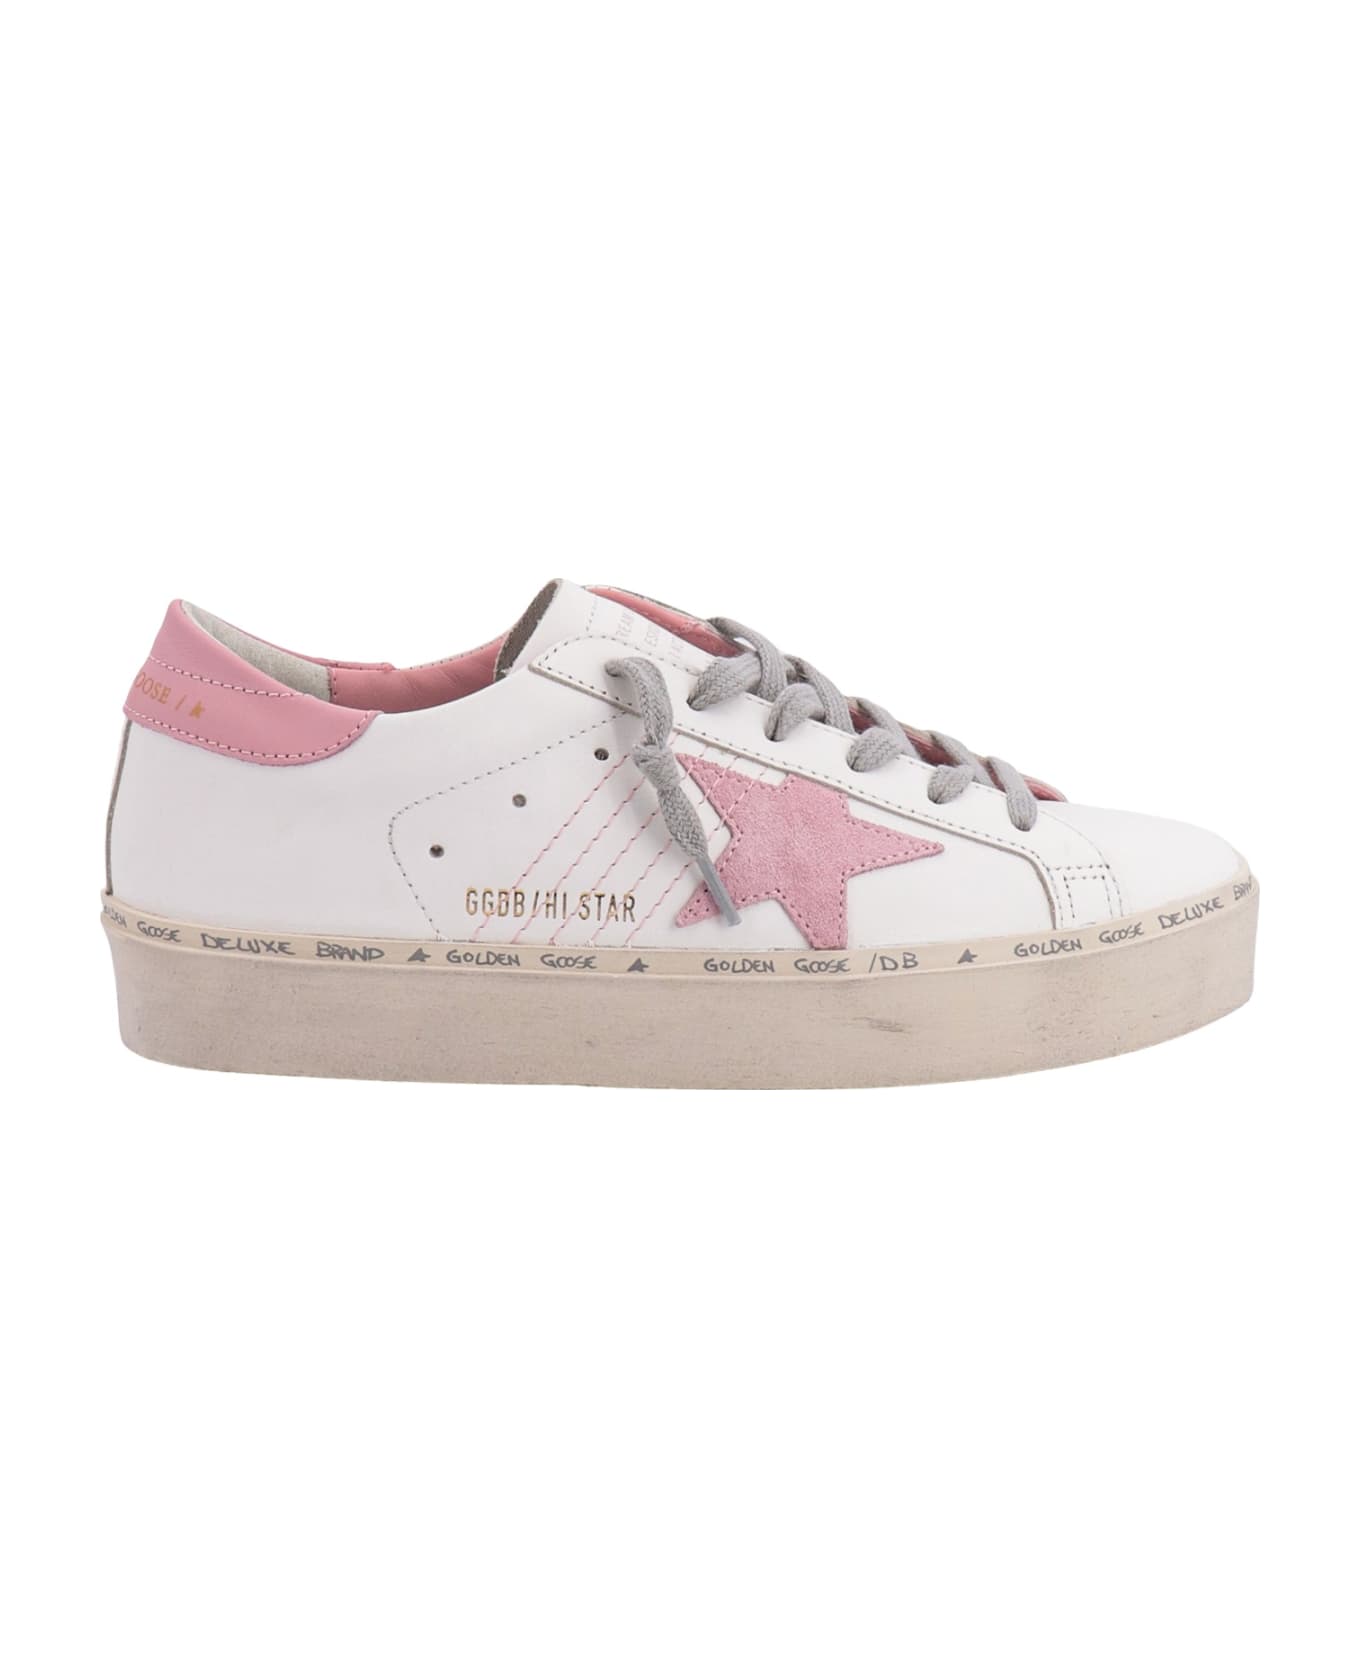 Golden Goose Hi Star Sneakers - White/Antique Pink